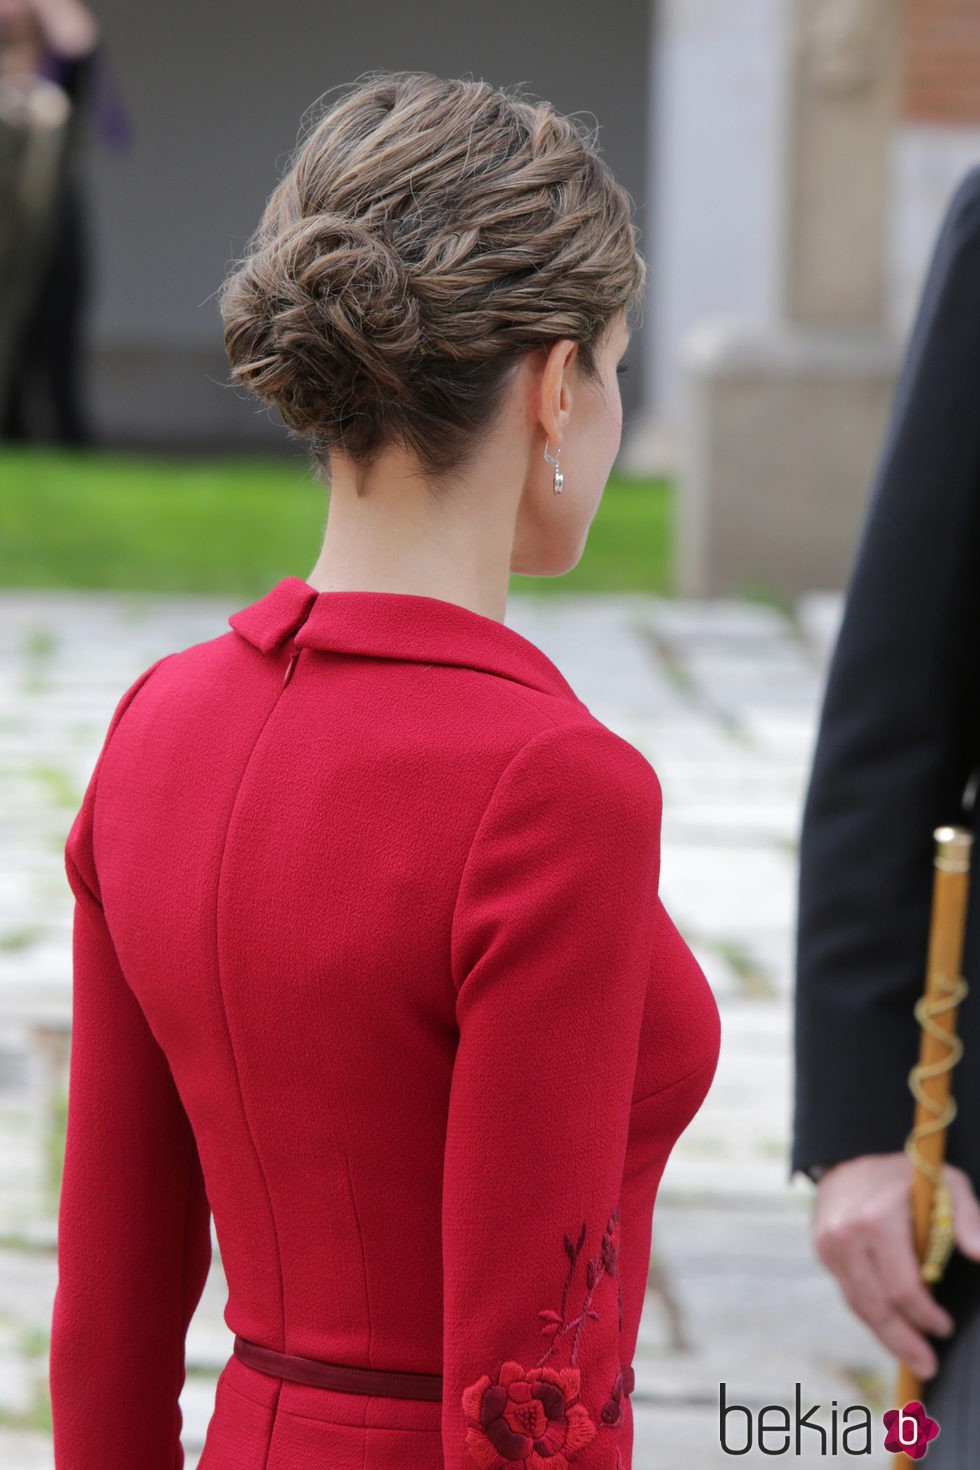 La Reina Letizia con moño en la entrega del Premio Cervantes 2014